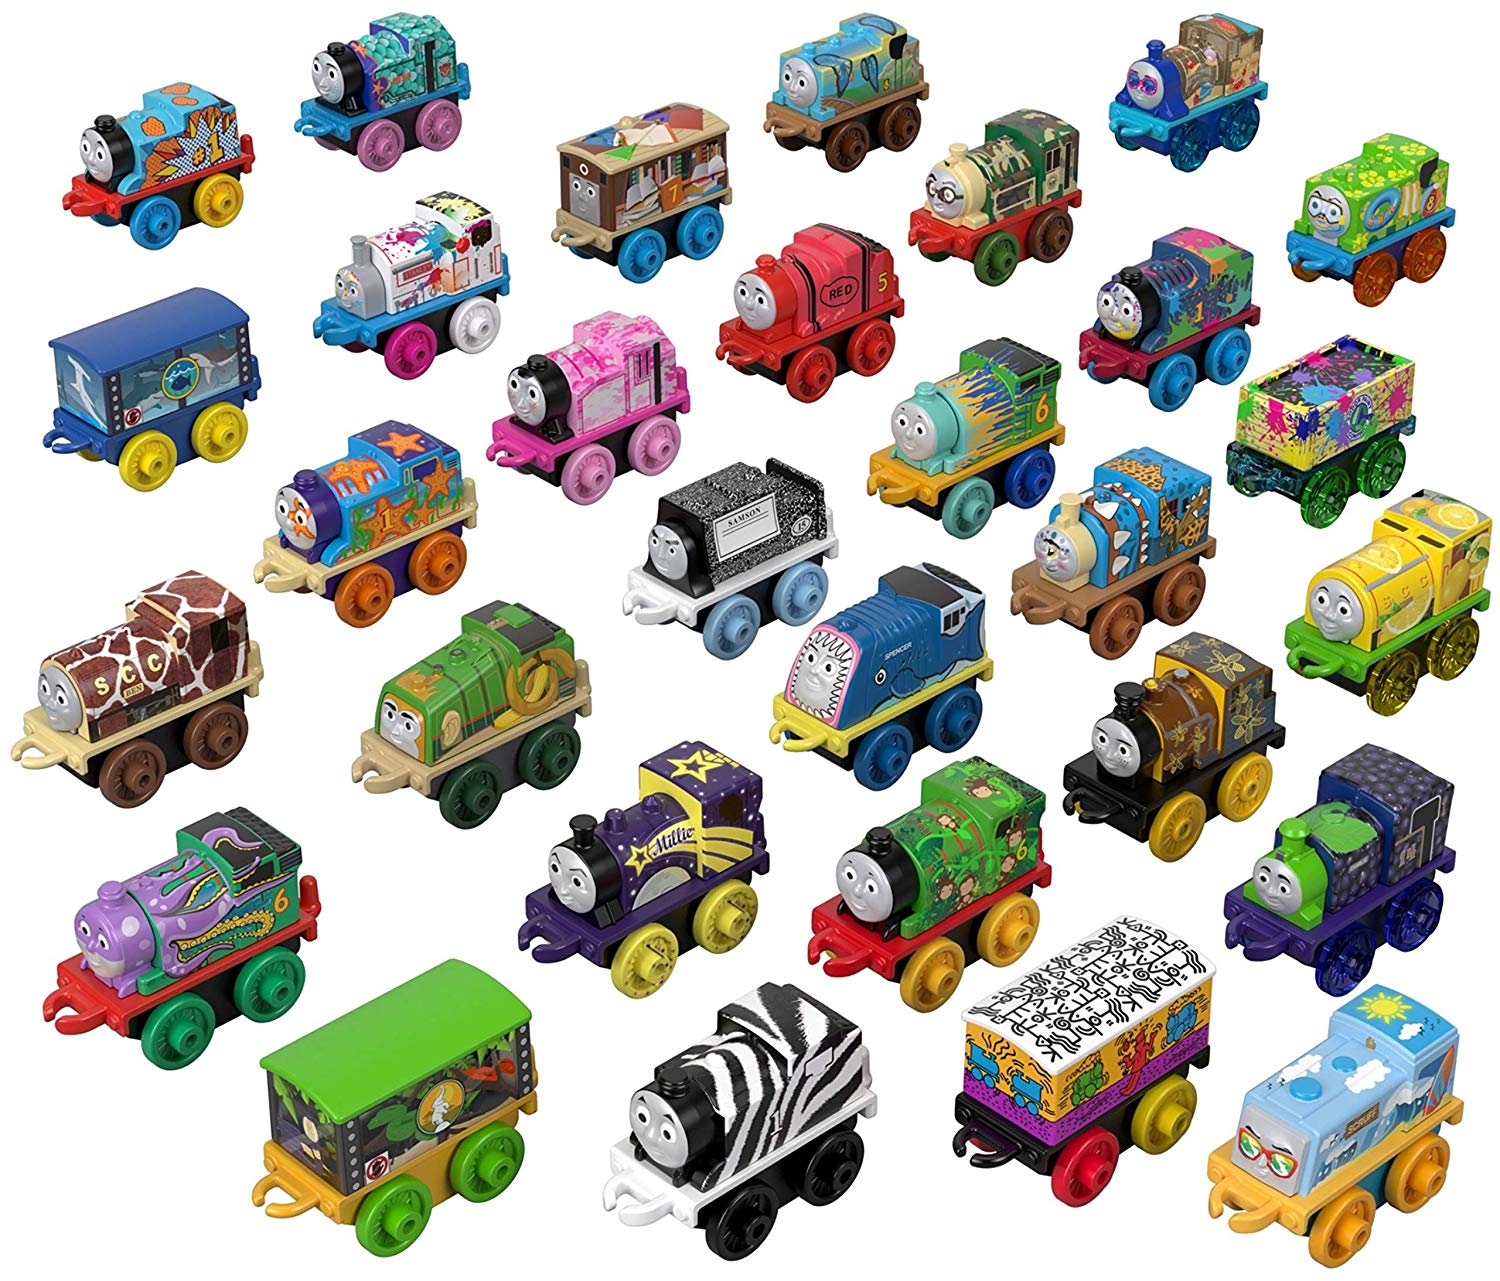 lego duplo toy story train